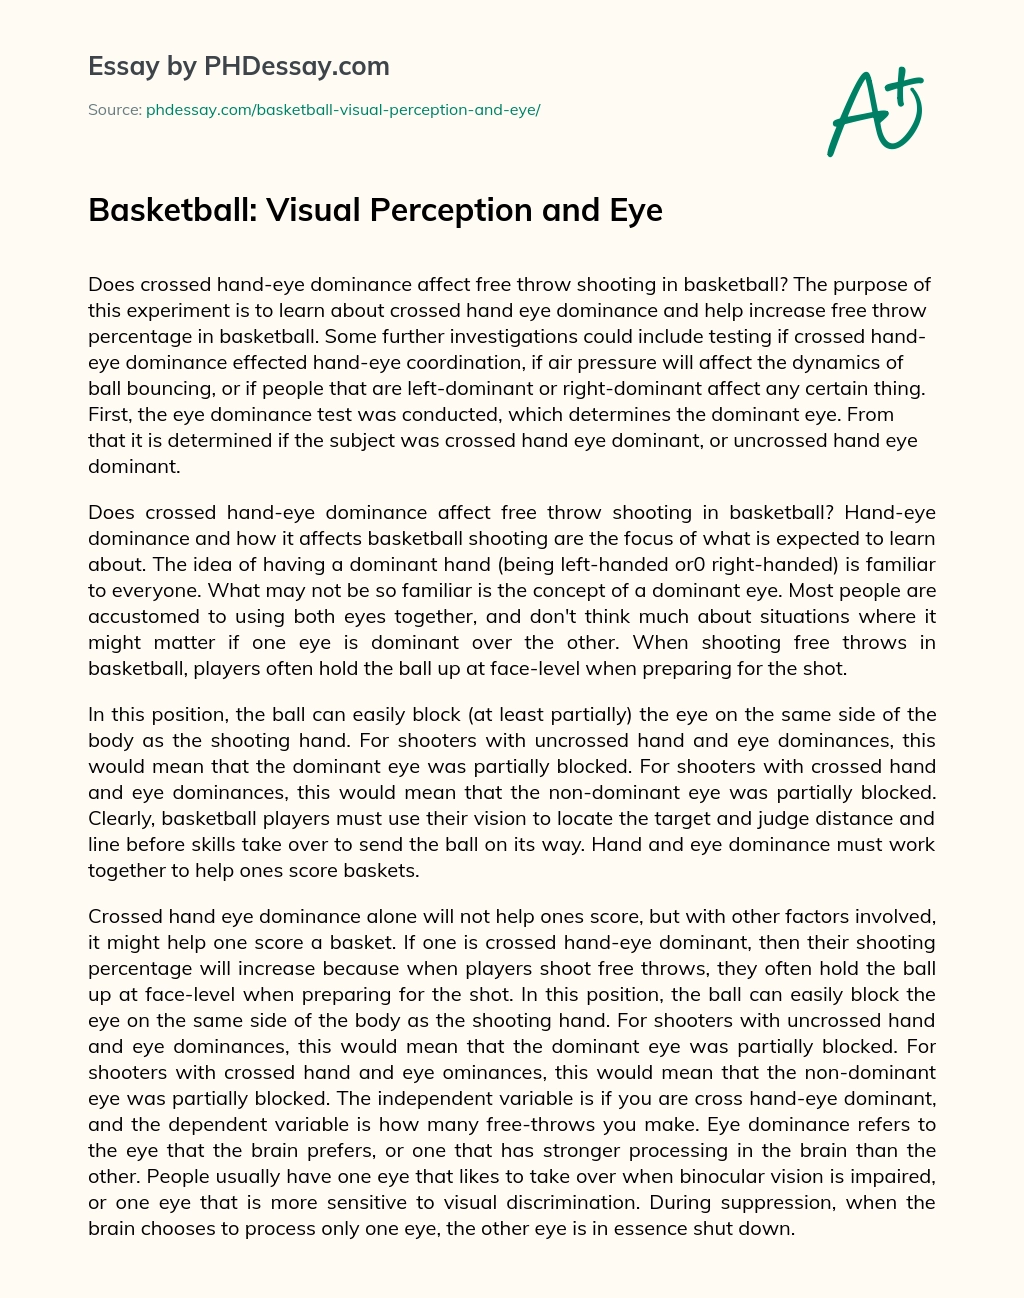 Basketball: Visual Perception and Eye essay